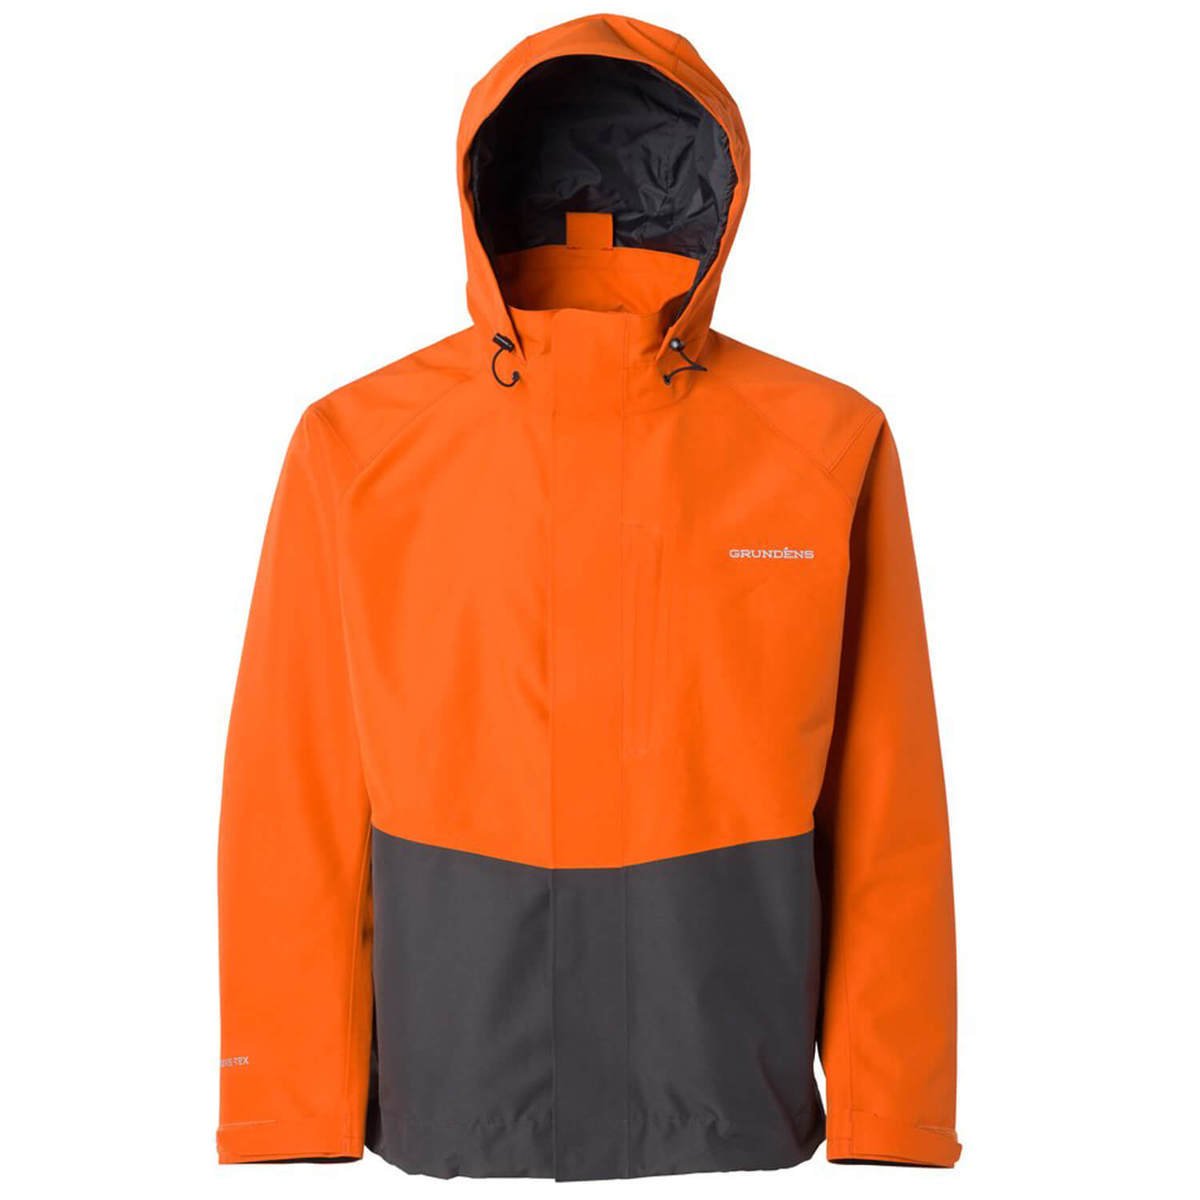 https://www.sportsmans.com/medias/grundens-mens-downrigger-gore-tex-waterproof-rain-jacket-burnt-orange-s-1535319-1.jpg?context=bWFzdGVyfGltYWdlc3w2MTgwMnxpbWFnZS9qcGVnfGFXMWhaMlZ6TDJoaVpTOW9OakV2T1RNM01UQXdNek00Tnprek5DNXFjR2N8NzI1MWI4ZTdjMzRlZTU2YWJjMGQwNTkyY2YzMzc5NmE1NTU1YWNmMzk0Y2Q5ZjQxMzlmMDYzZTExZGFiZDhlYQ